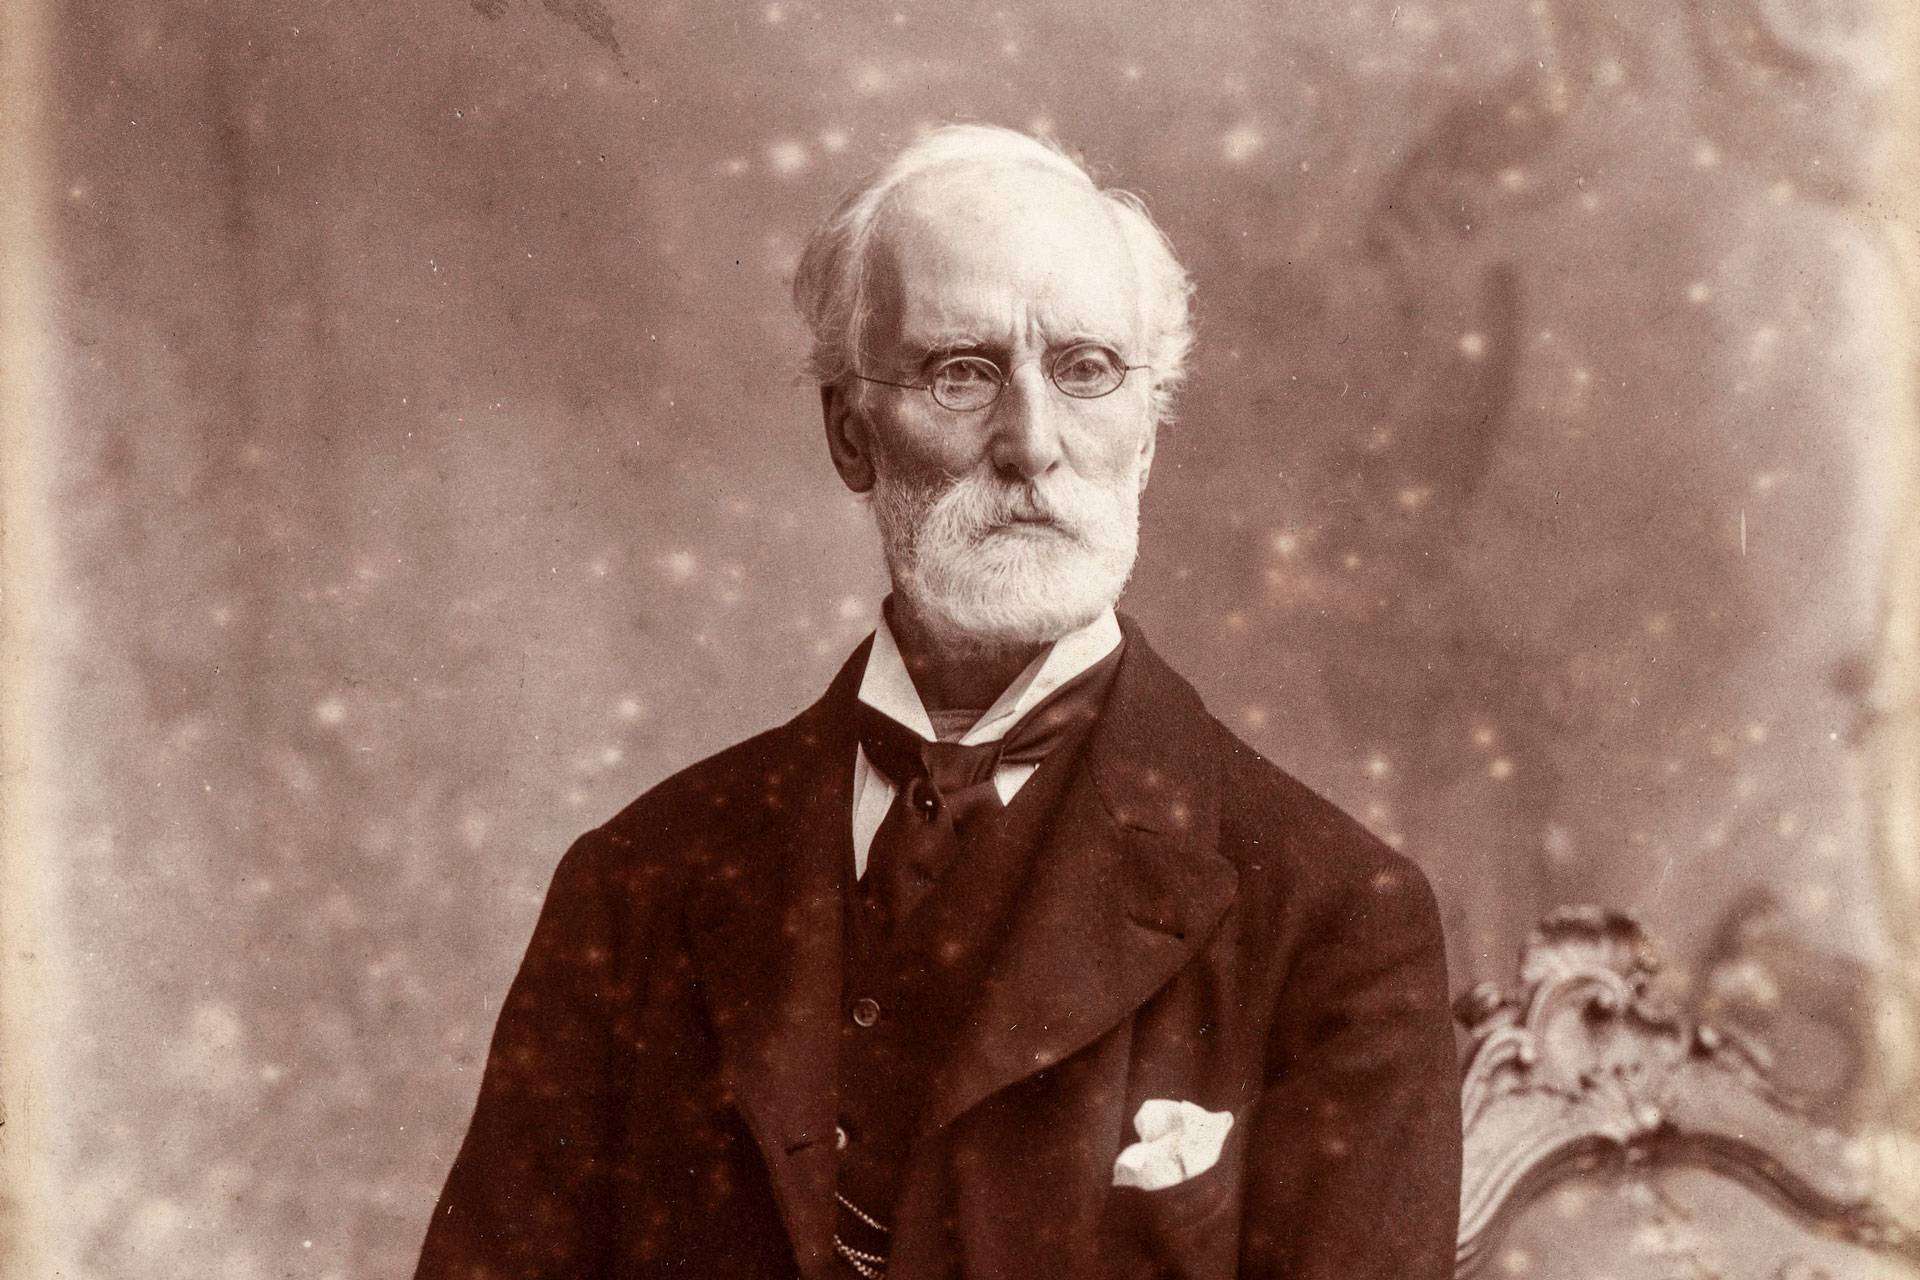 Victorian photograph portrait of Frederick William Burton